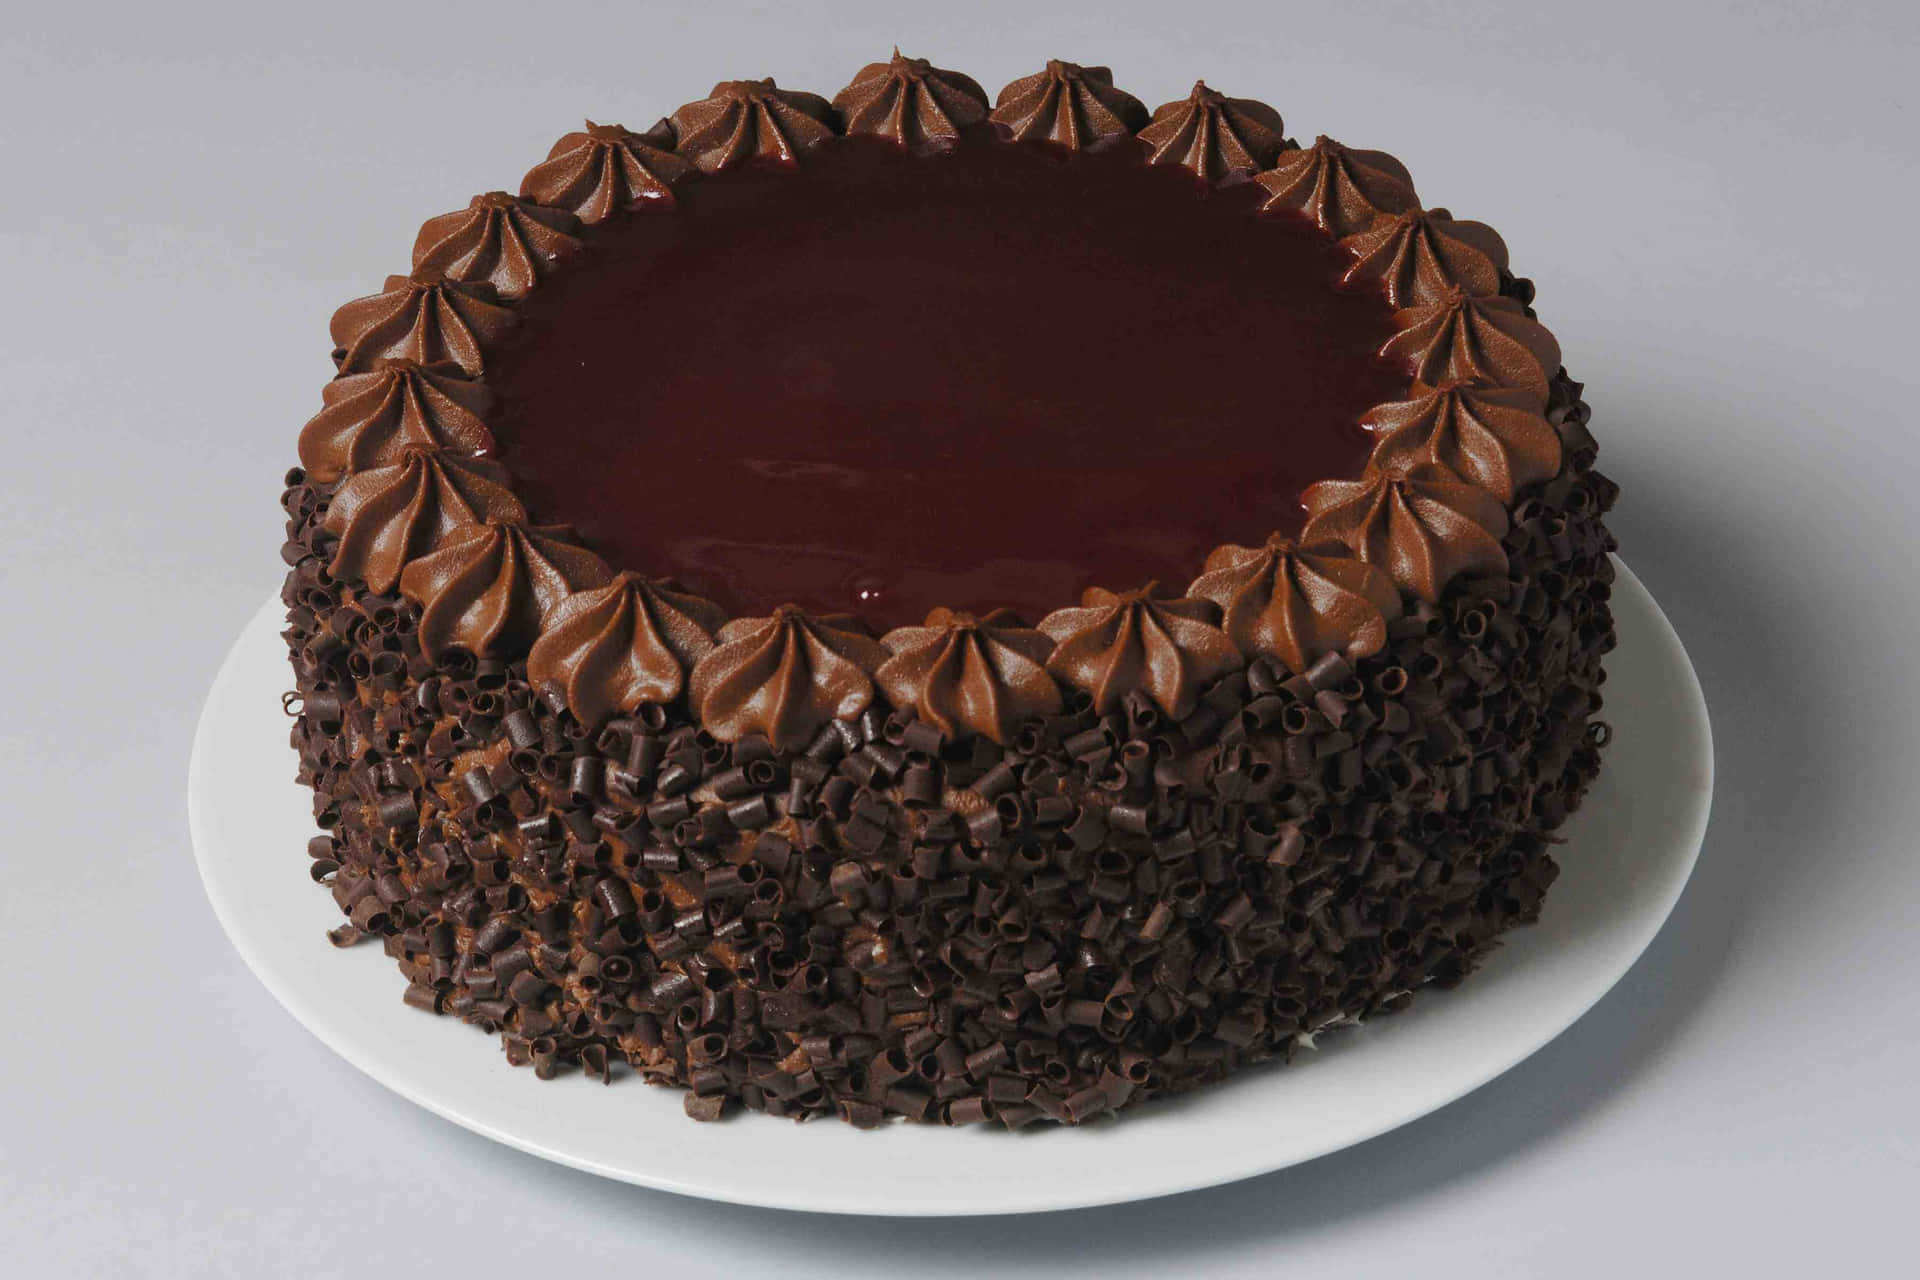 Enjoy a decadent piece of delicious chocolate cake.